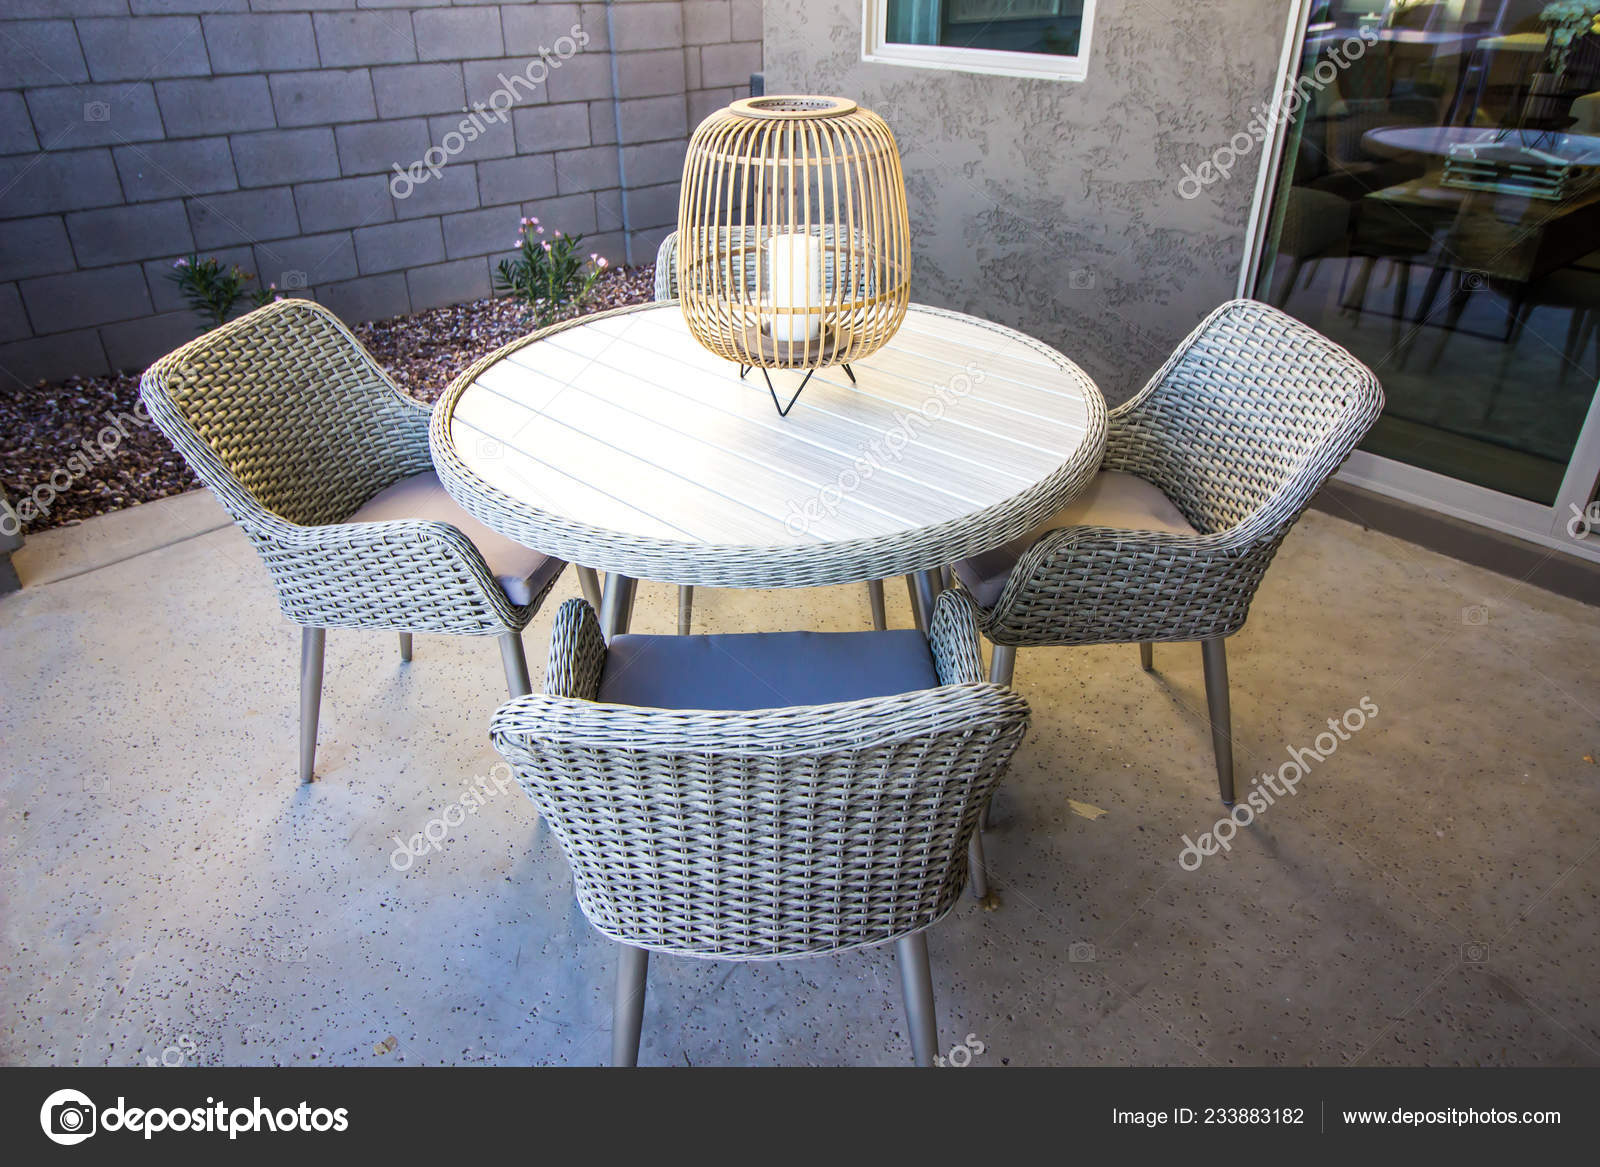 Wicker Patio Table Chairs Stock Photo Weezybob5 233883182 inside sizing 1600 X 1167